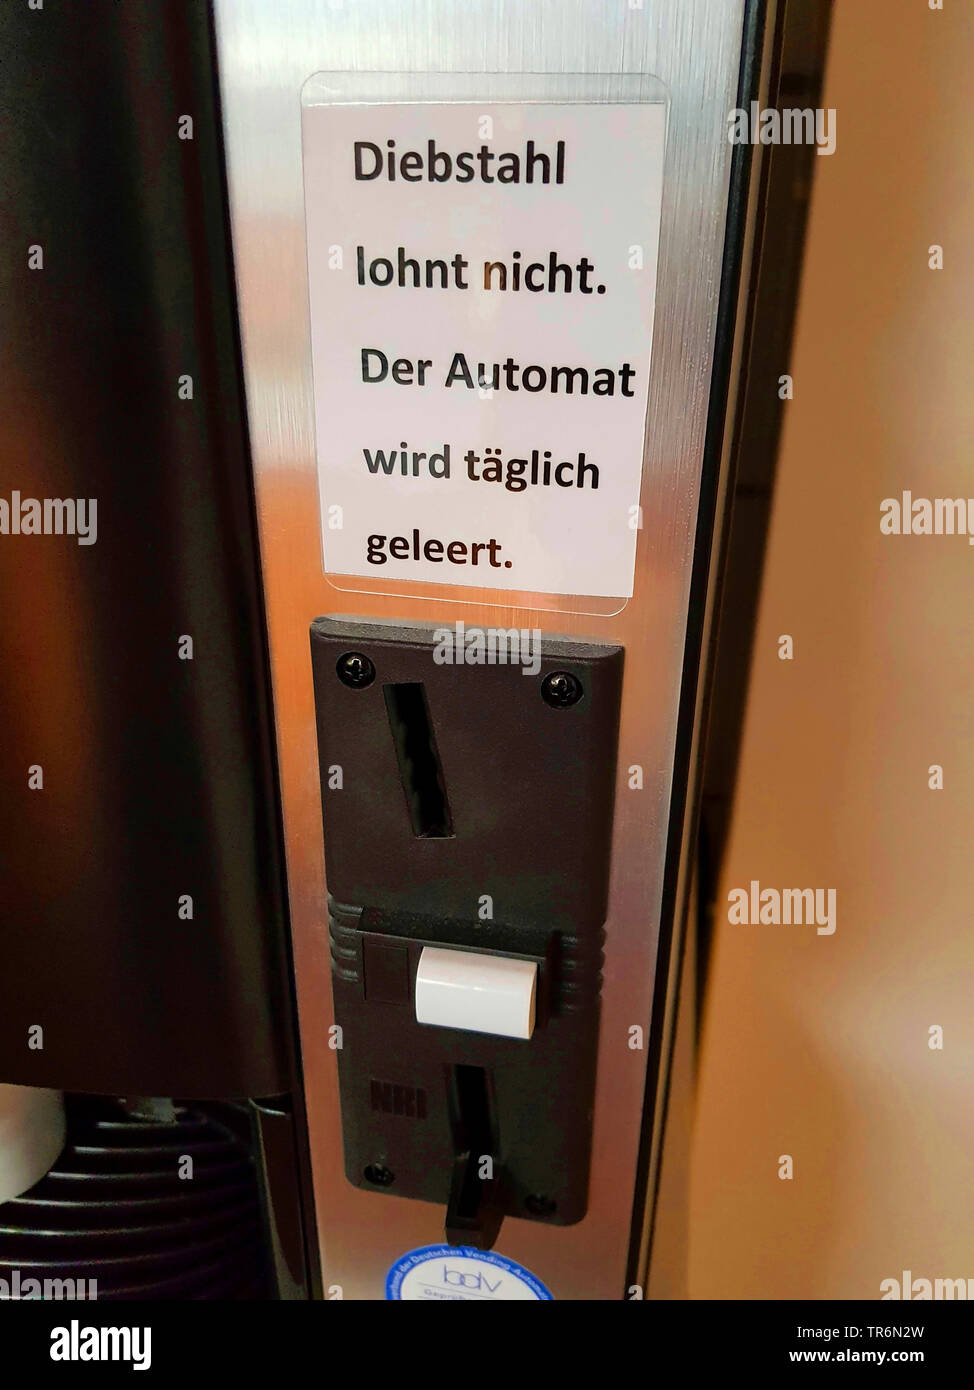 note at a coffee vending machine: Diebstahl lohnt nicht. Der Automat wird taeglich geleert, theft is not worth, machine is emtied daily, Germany Stock Photo